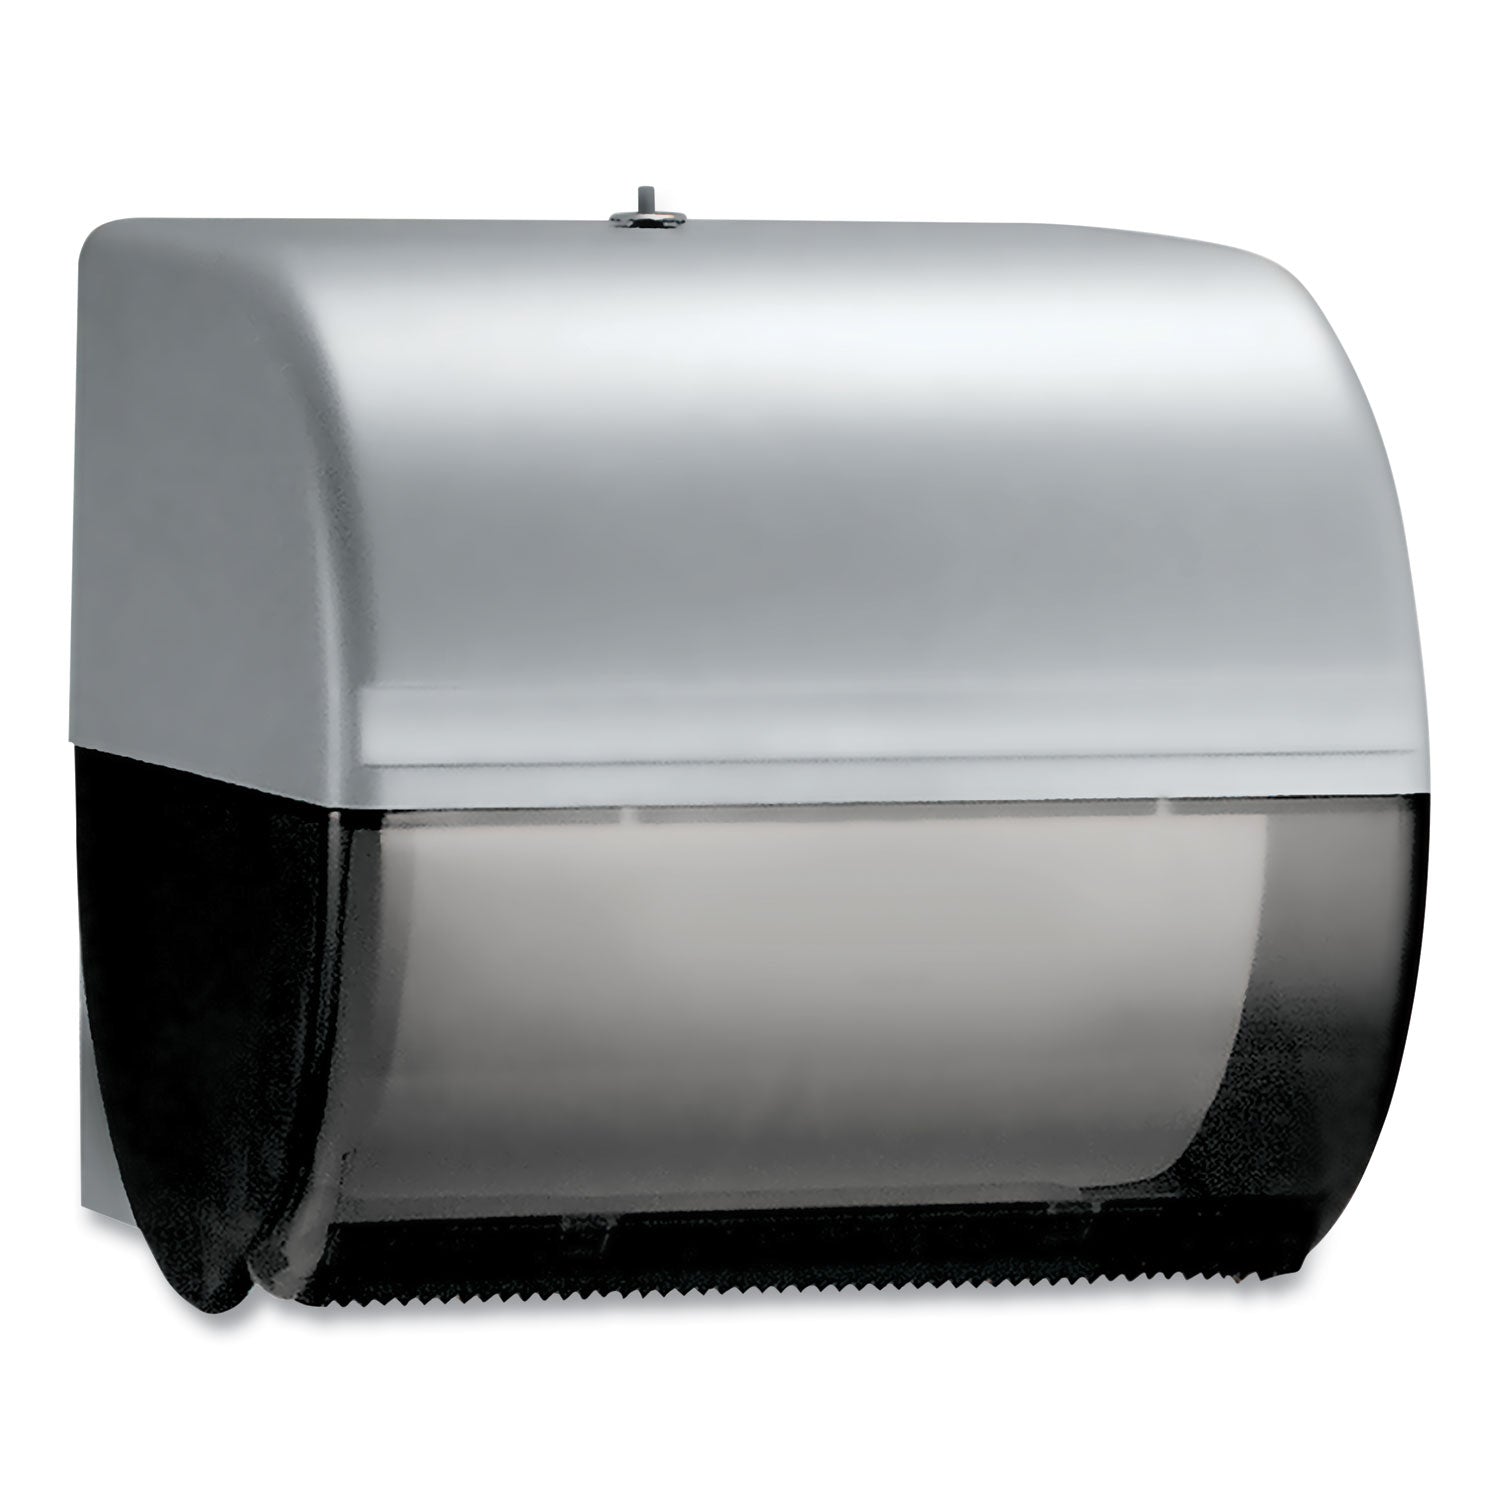 omni-roll-towel-dispenser-105-x-10-x-10-smoke-gray_kcc09746 - 1